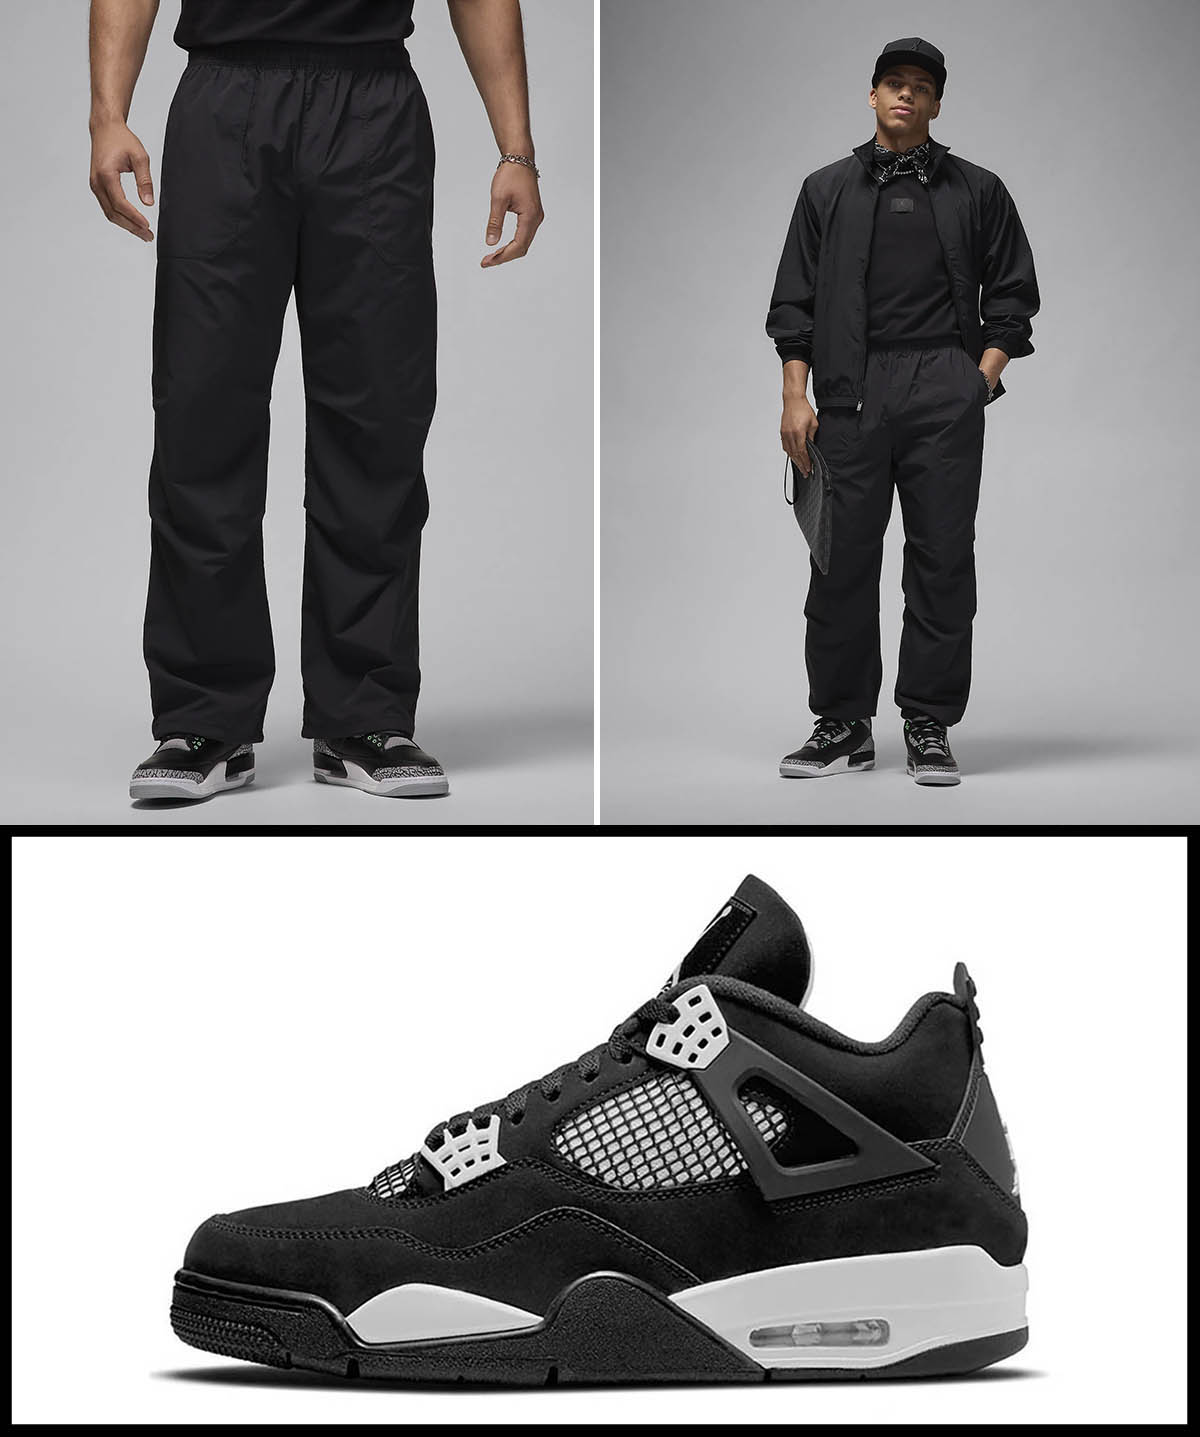 Black Air Jordan III Outfit